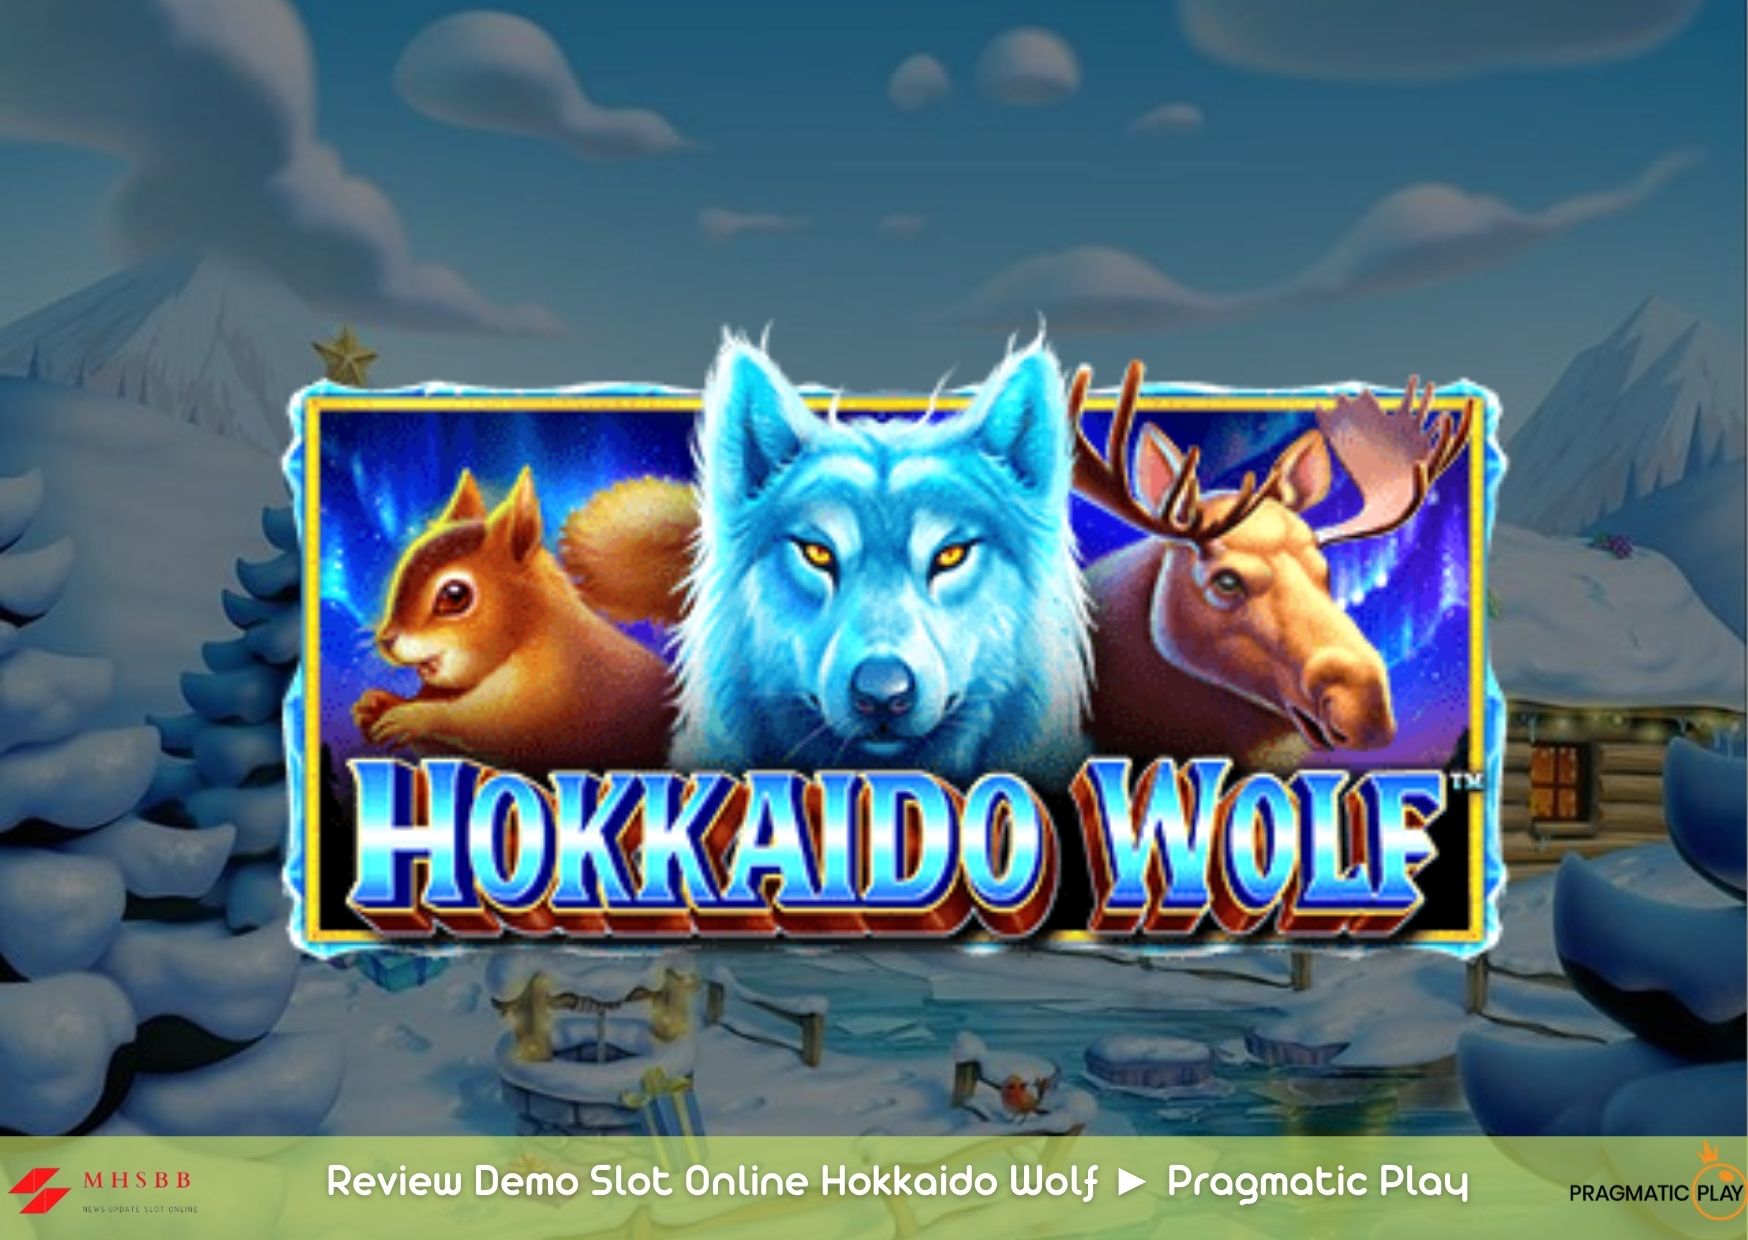 Review Demo Slot Online Hokkaido Wolf ► Pragmatic Play